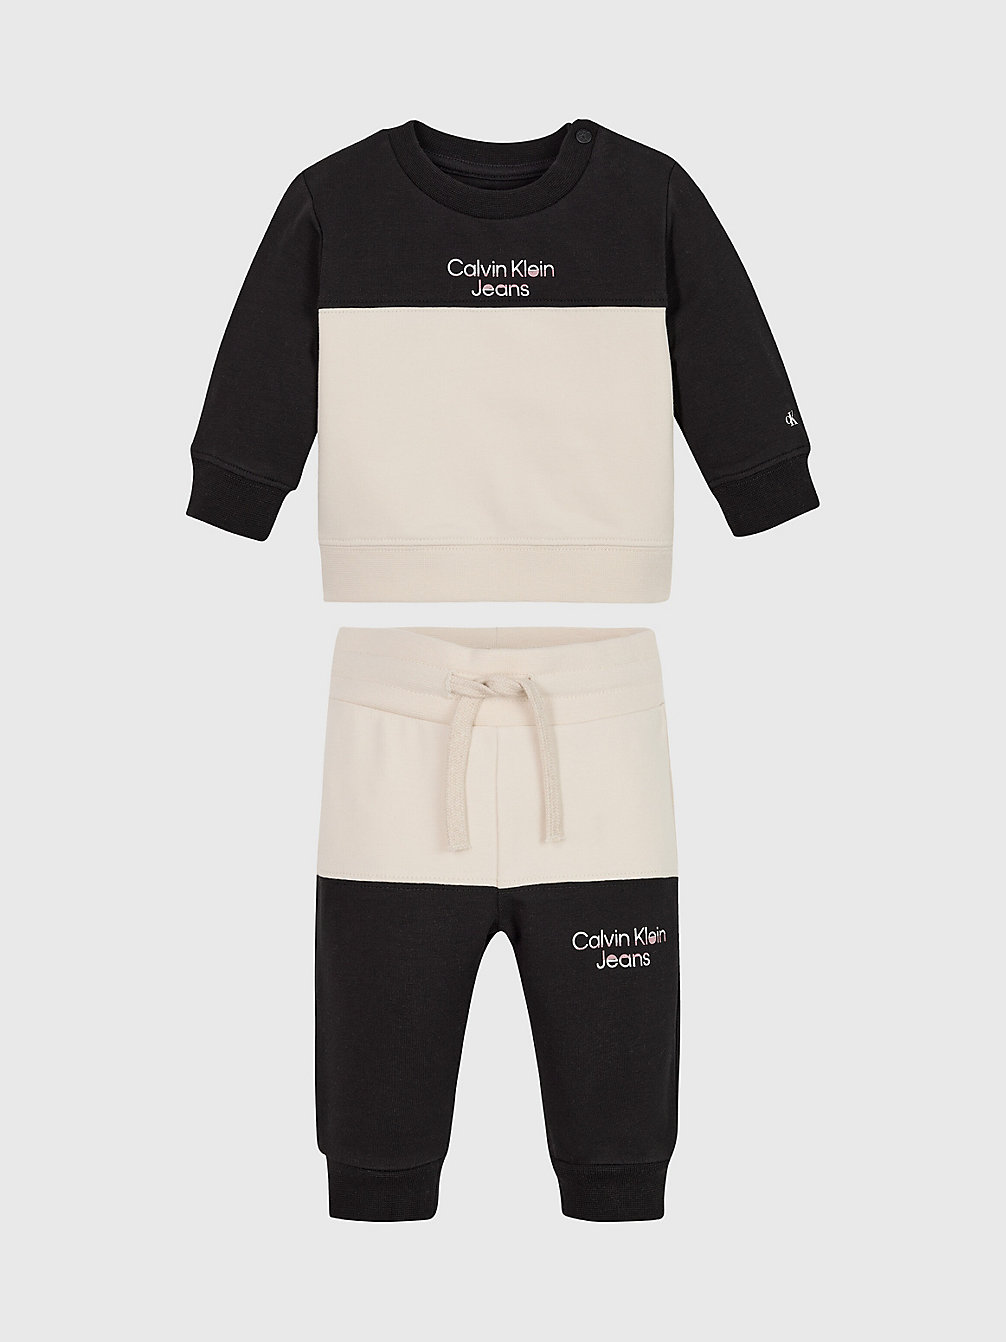 CK BLACK Newborn-Trainingspak Met Colourblock undefined newborn Calvin Klein